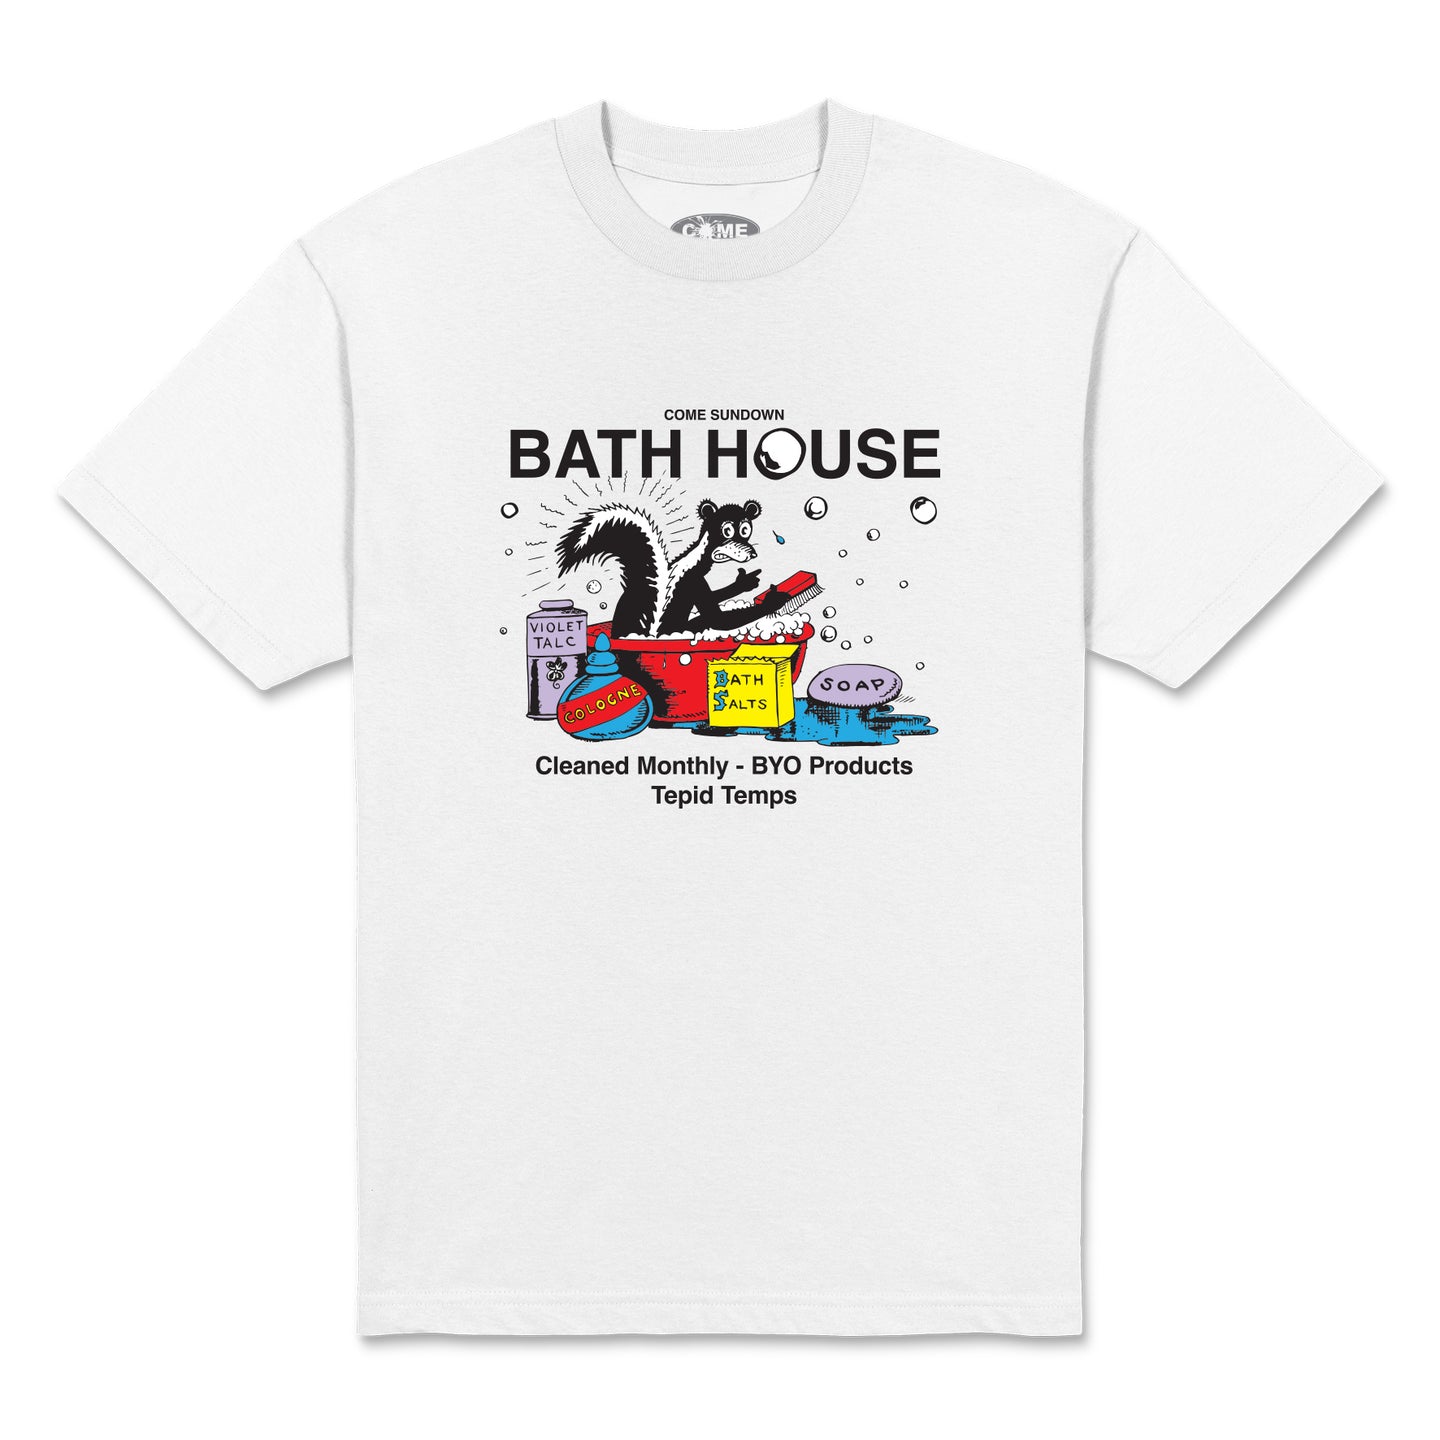 BATH HOUSE S/S WHITE